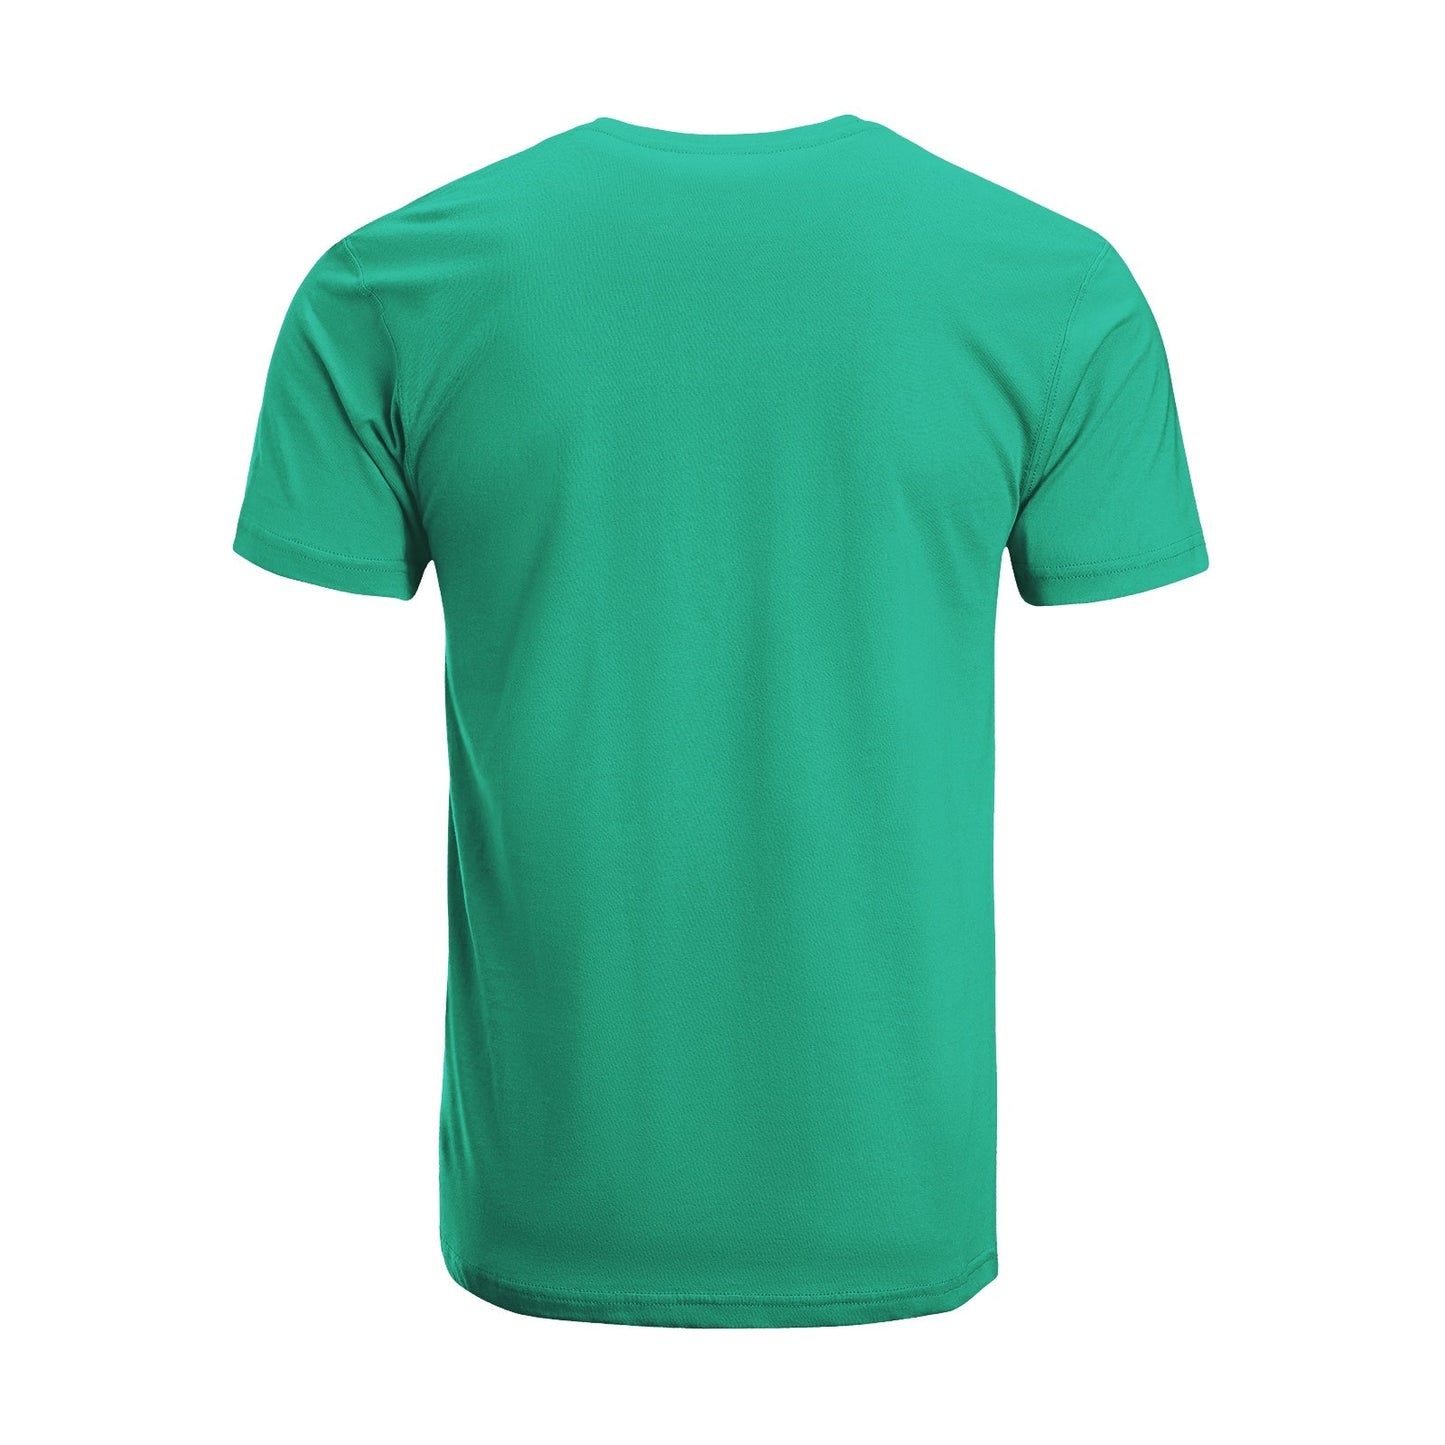 Unisex Short Sleeve Crew Neck Cotton Jersey T-Shirt CAT 27 - Tara-Outfits.com